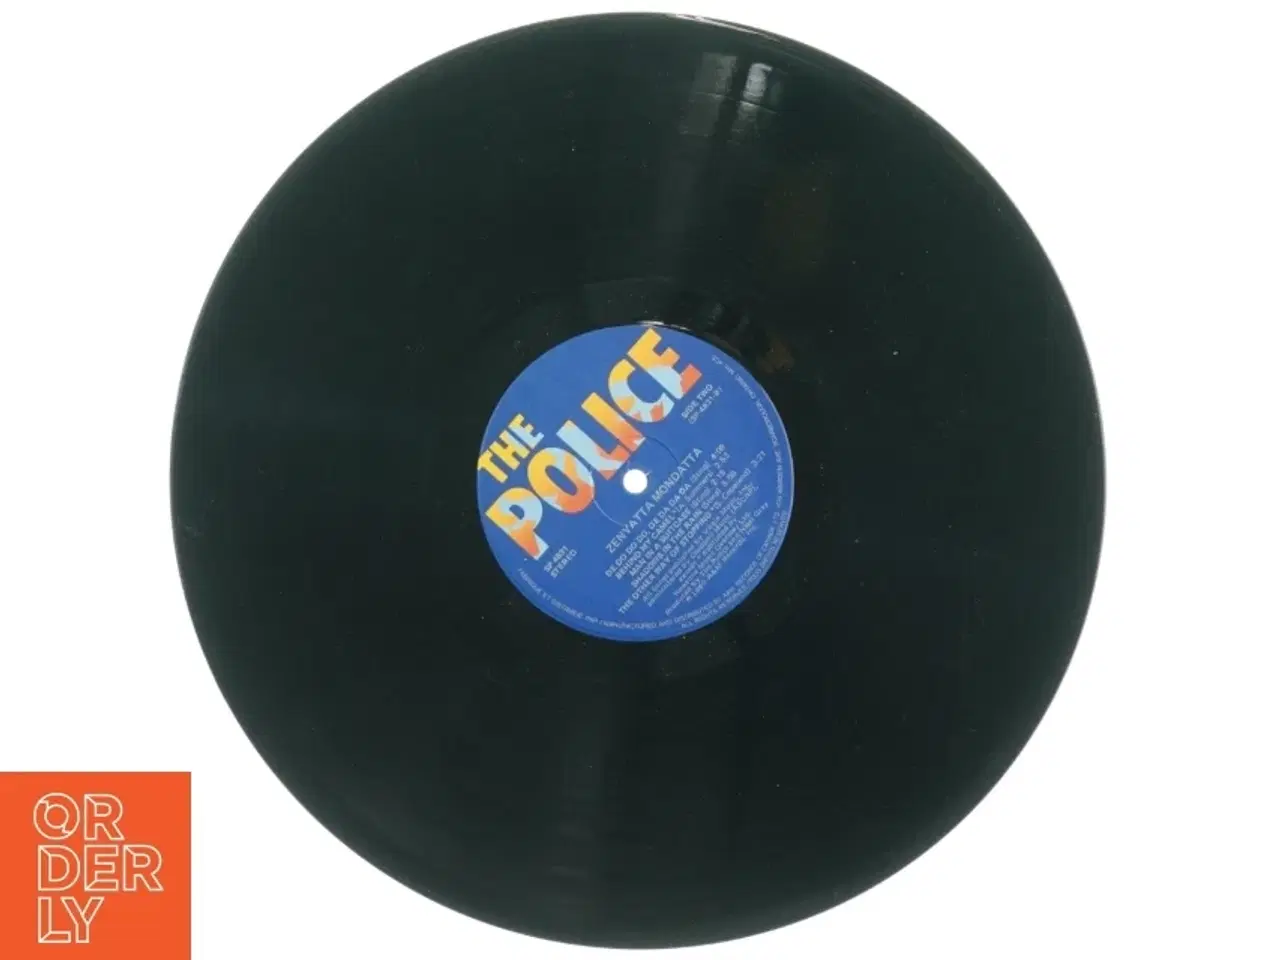 Billede 2 - The Police - Zenyatta Mondatta Vinyl LP fra A&M Records (str. 31 x 31 cm)